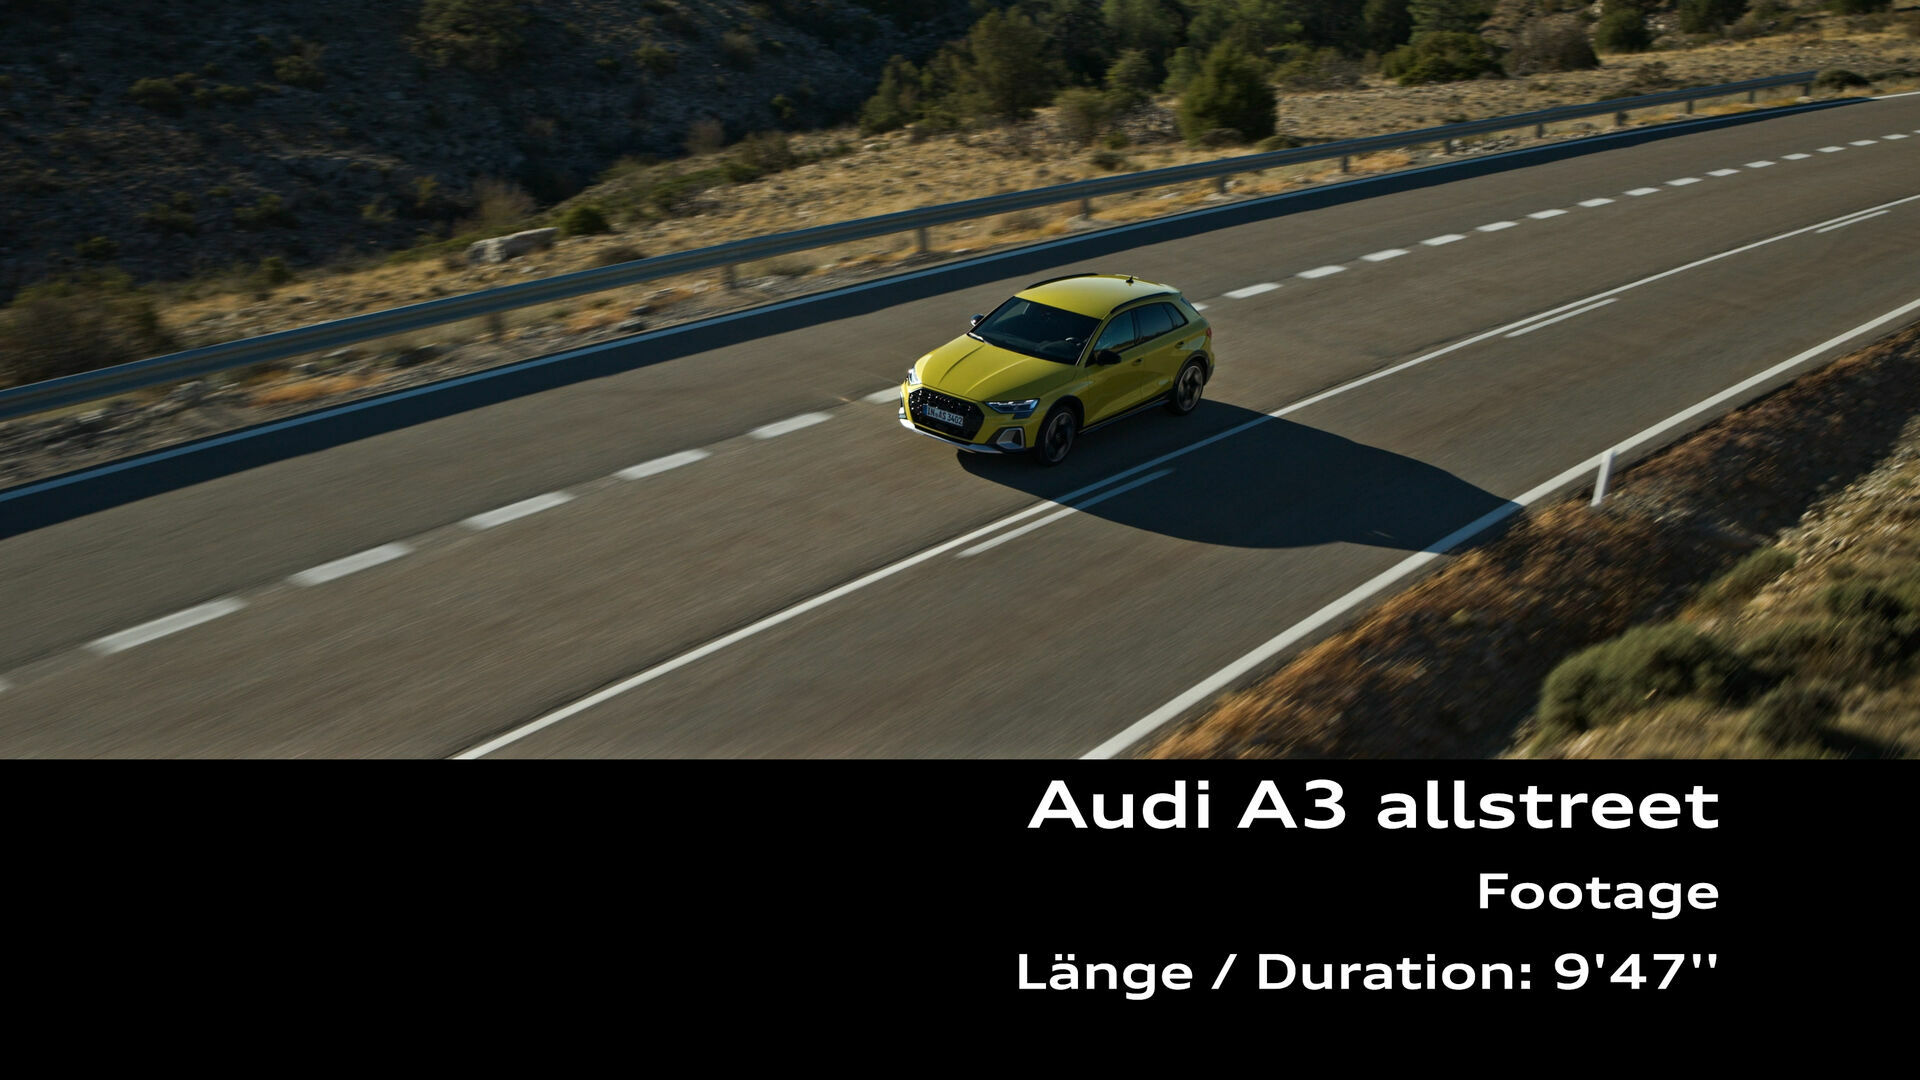 Audi A3 allstreet – Footage (dynamic)